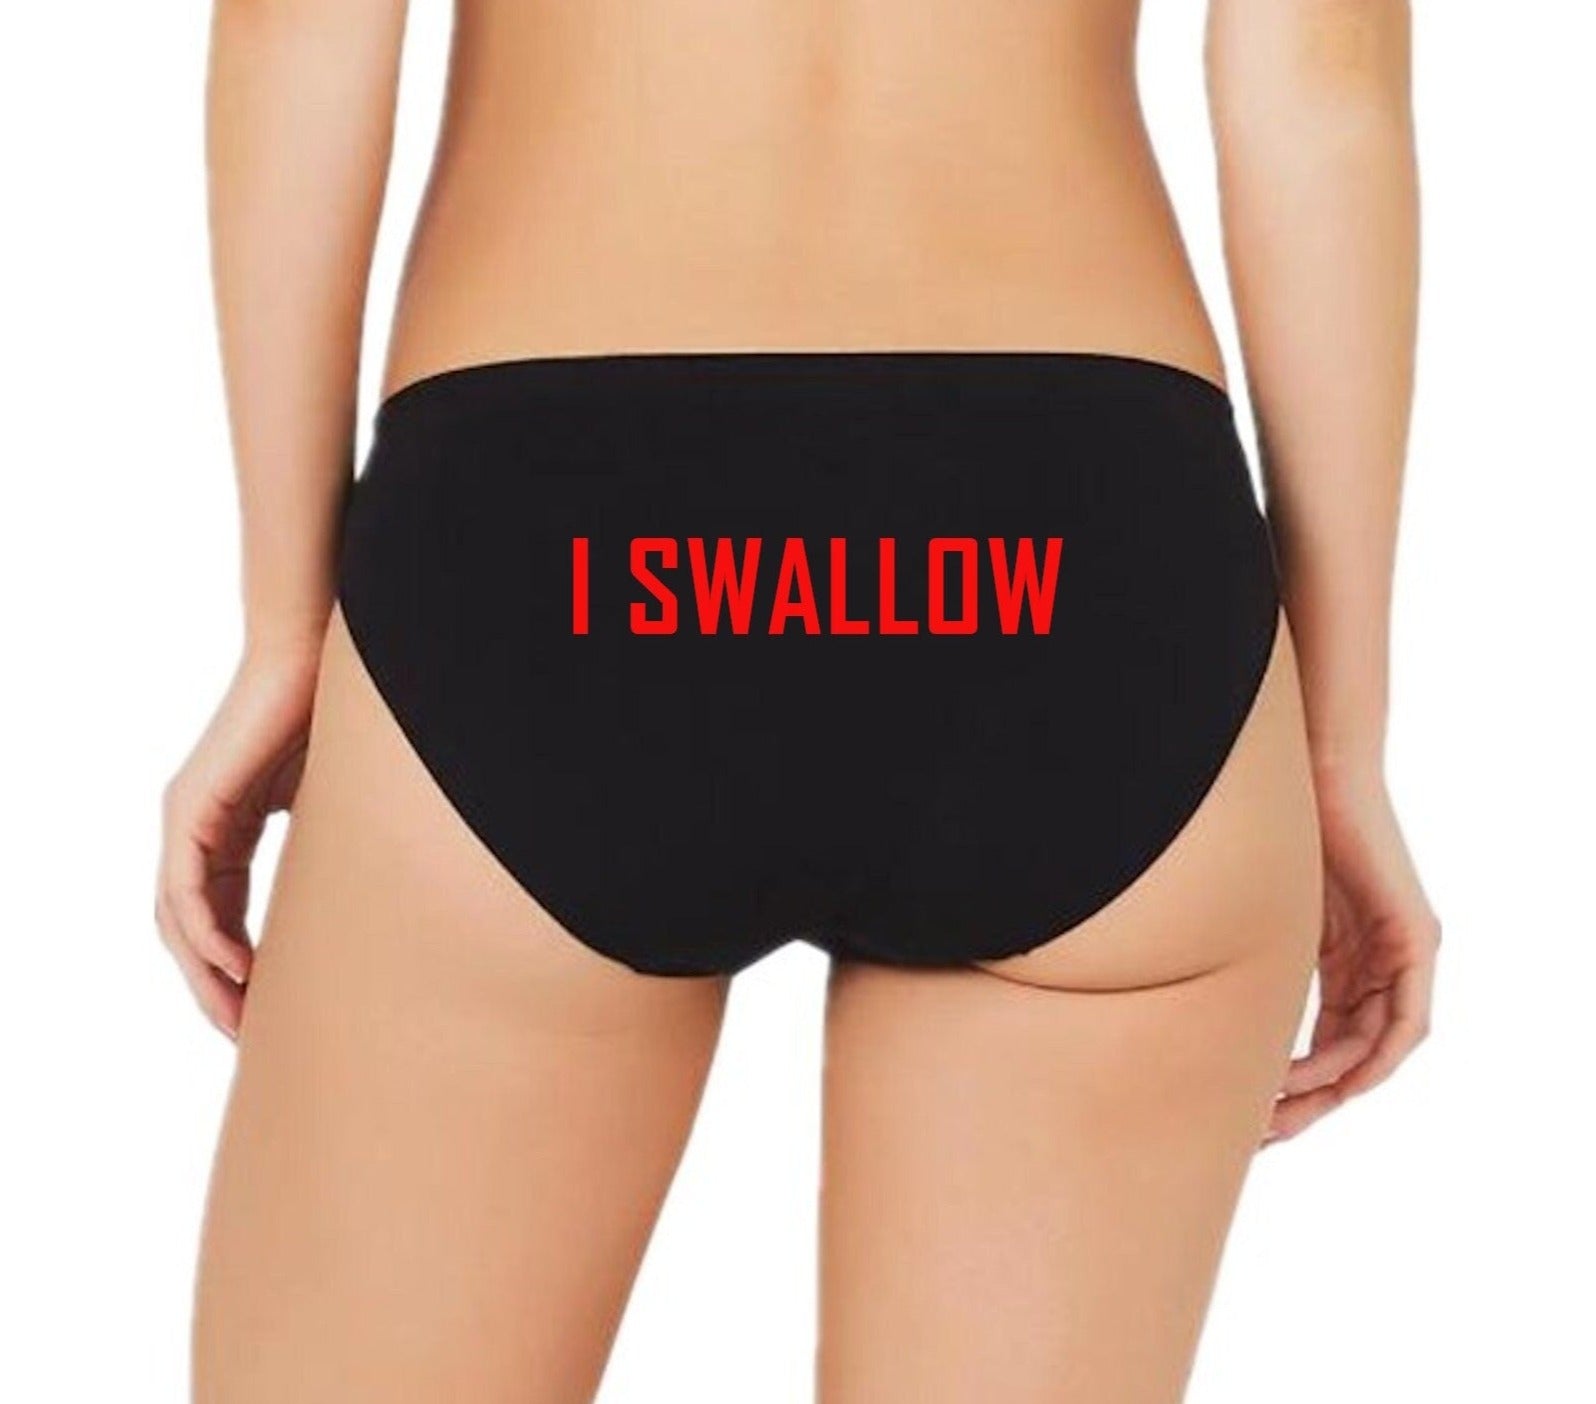 I Swallow Cum Slut Panties